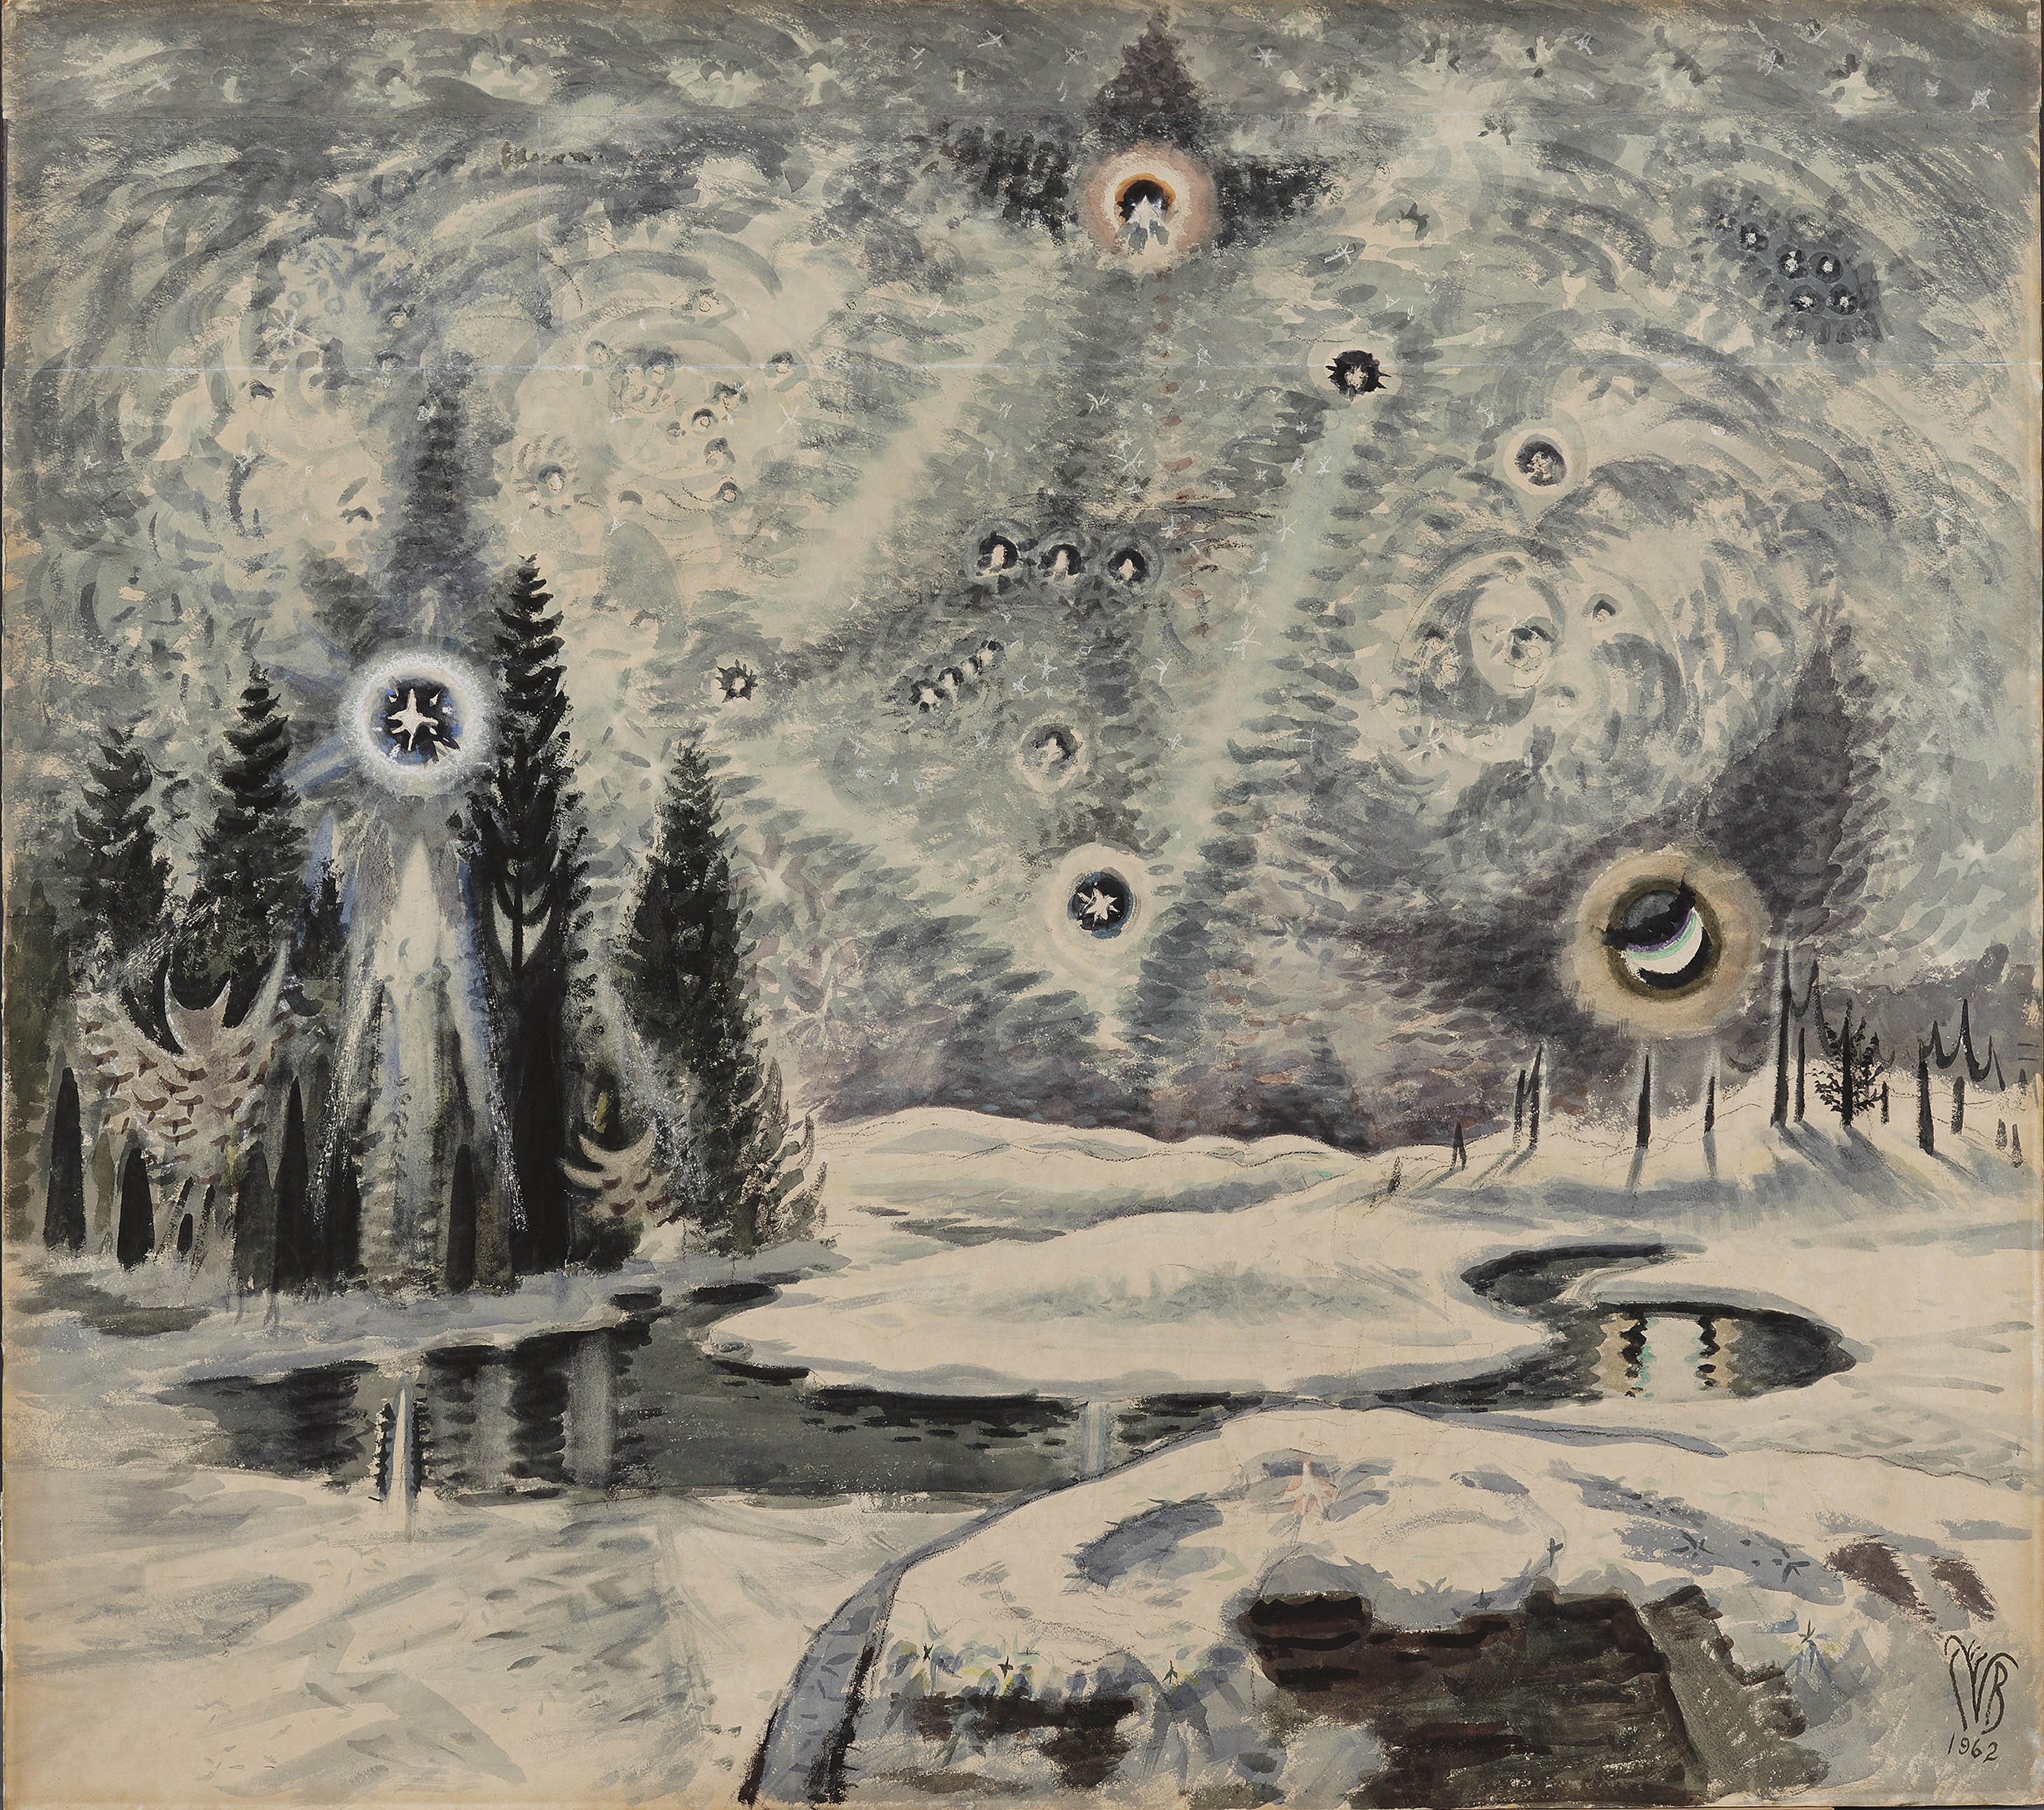 Orion in Winter. Charles Ephraim Burchfield